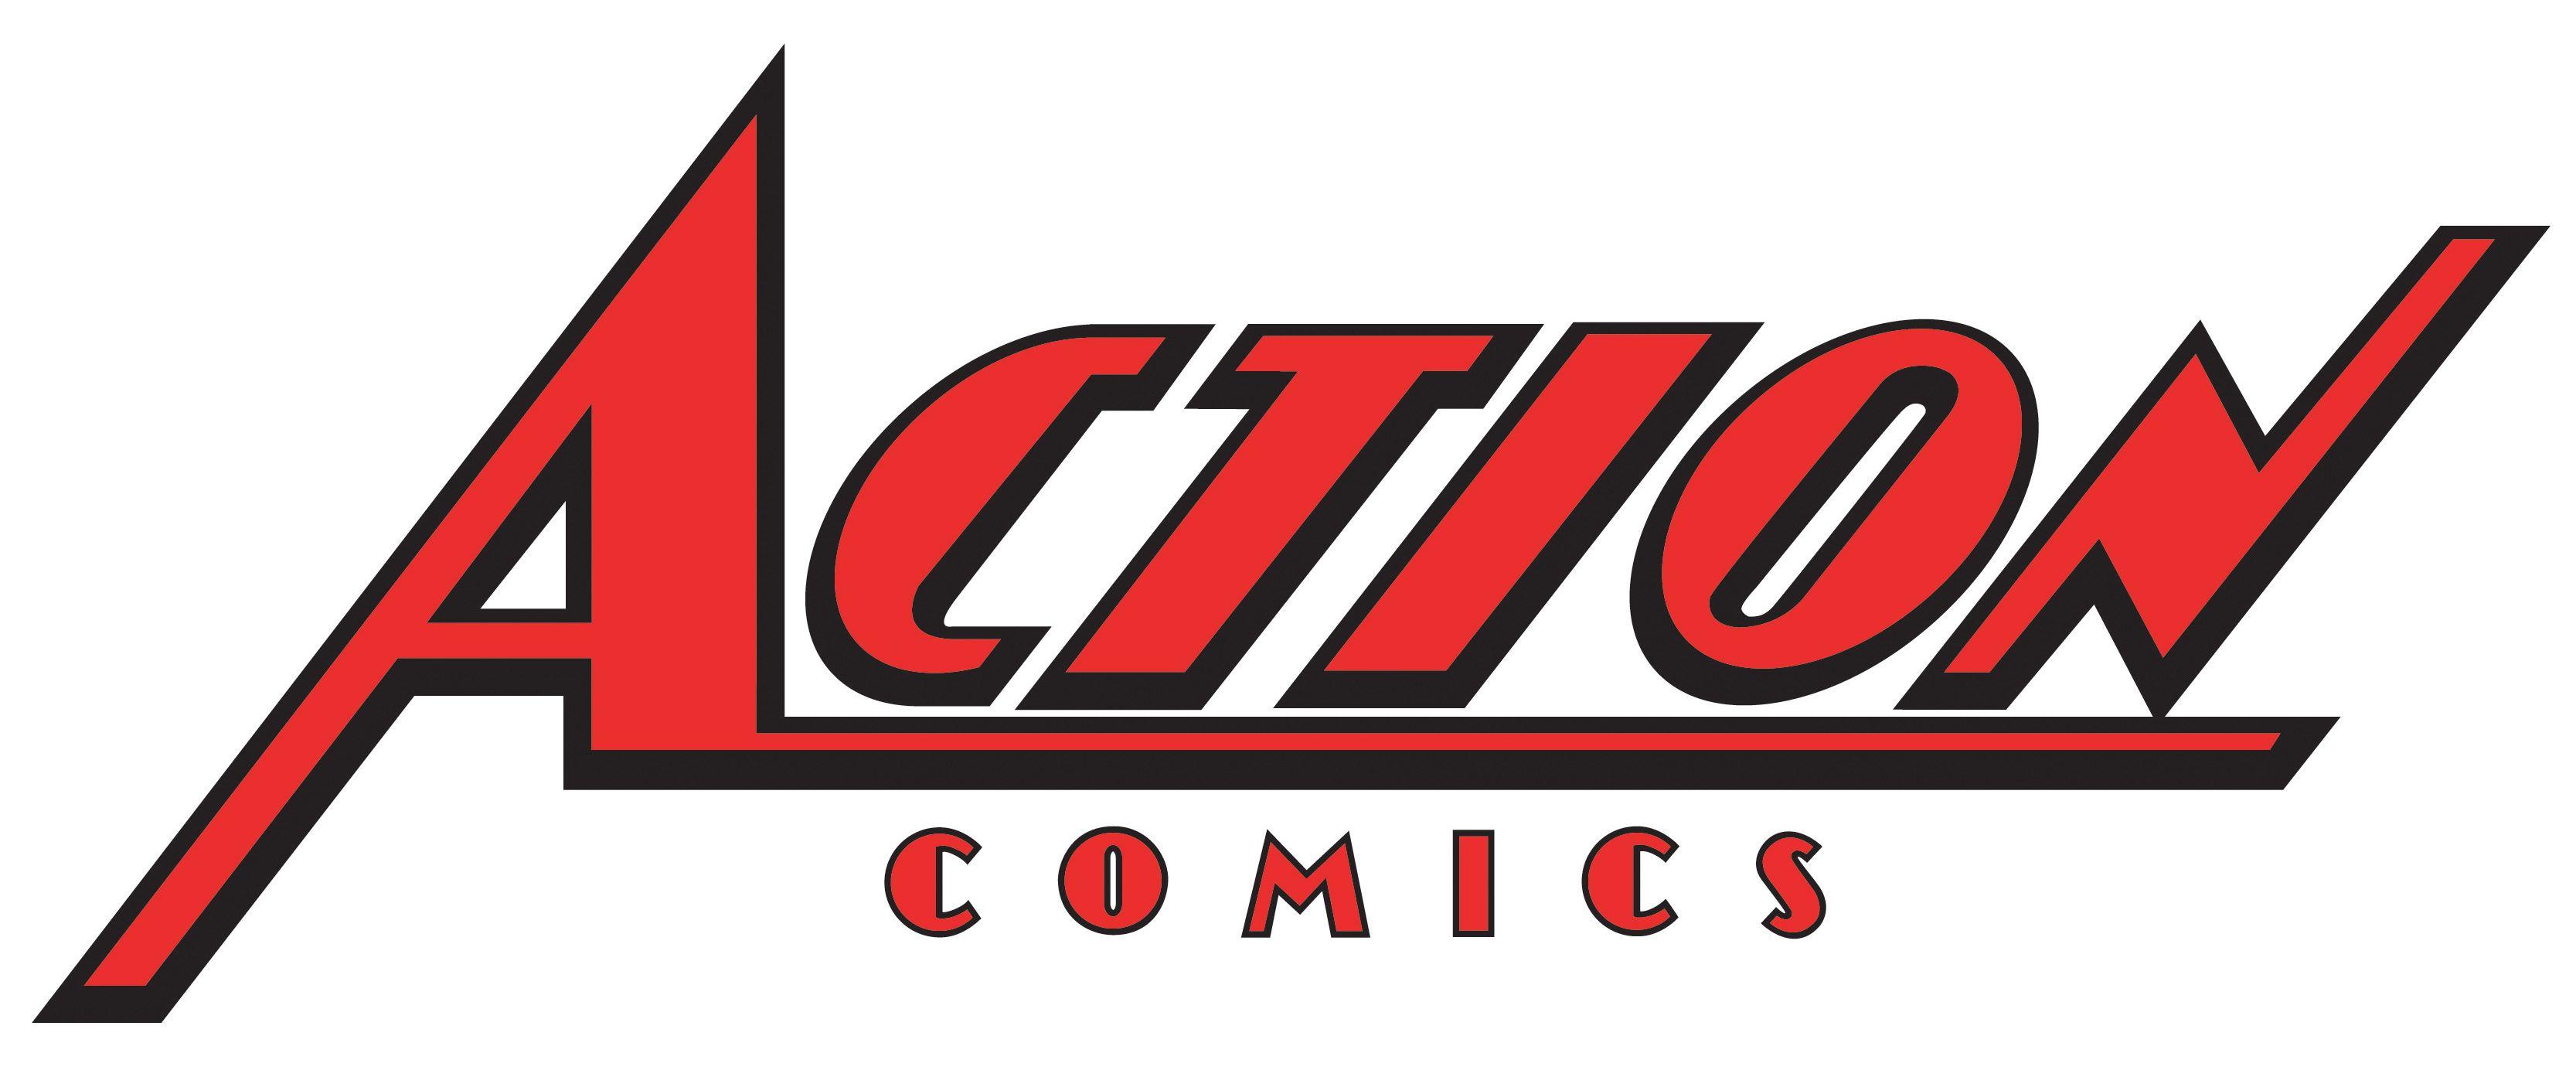 Action Logo - Action Comics